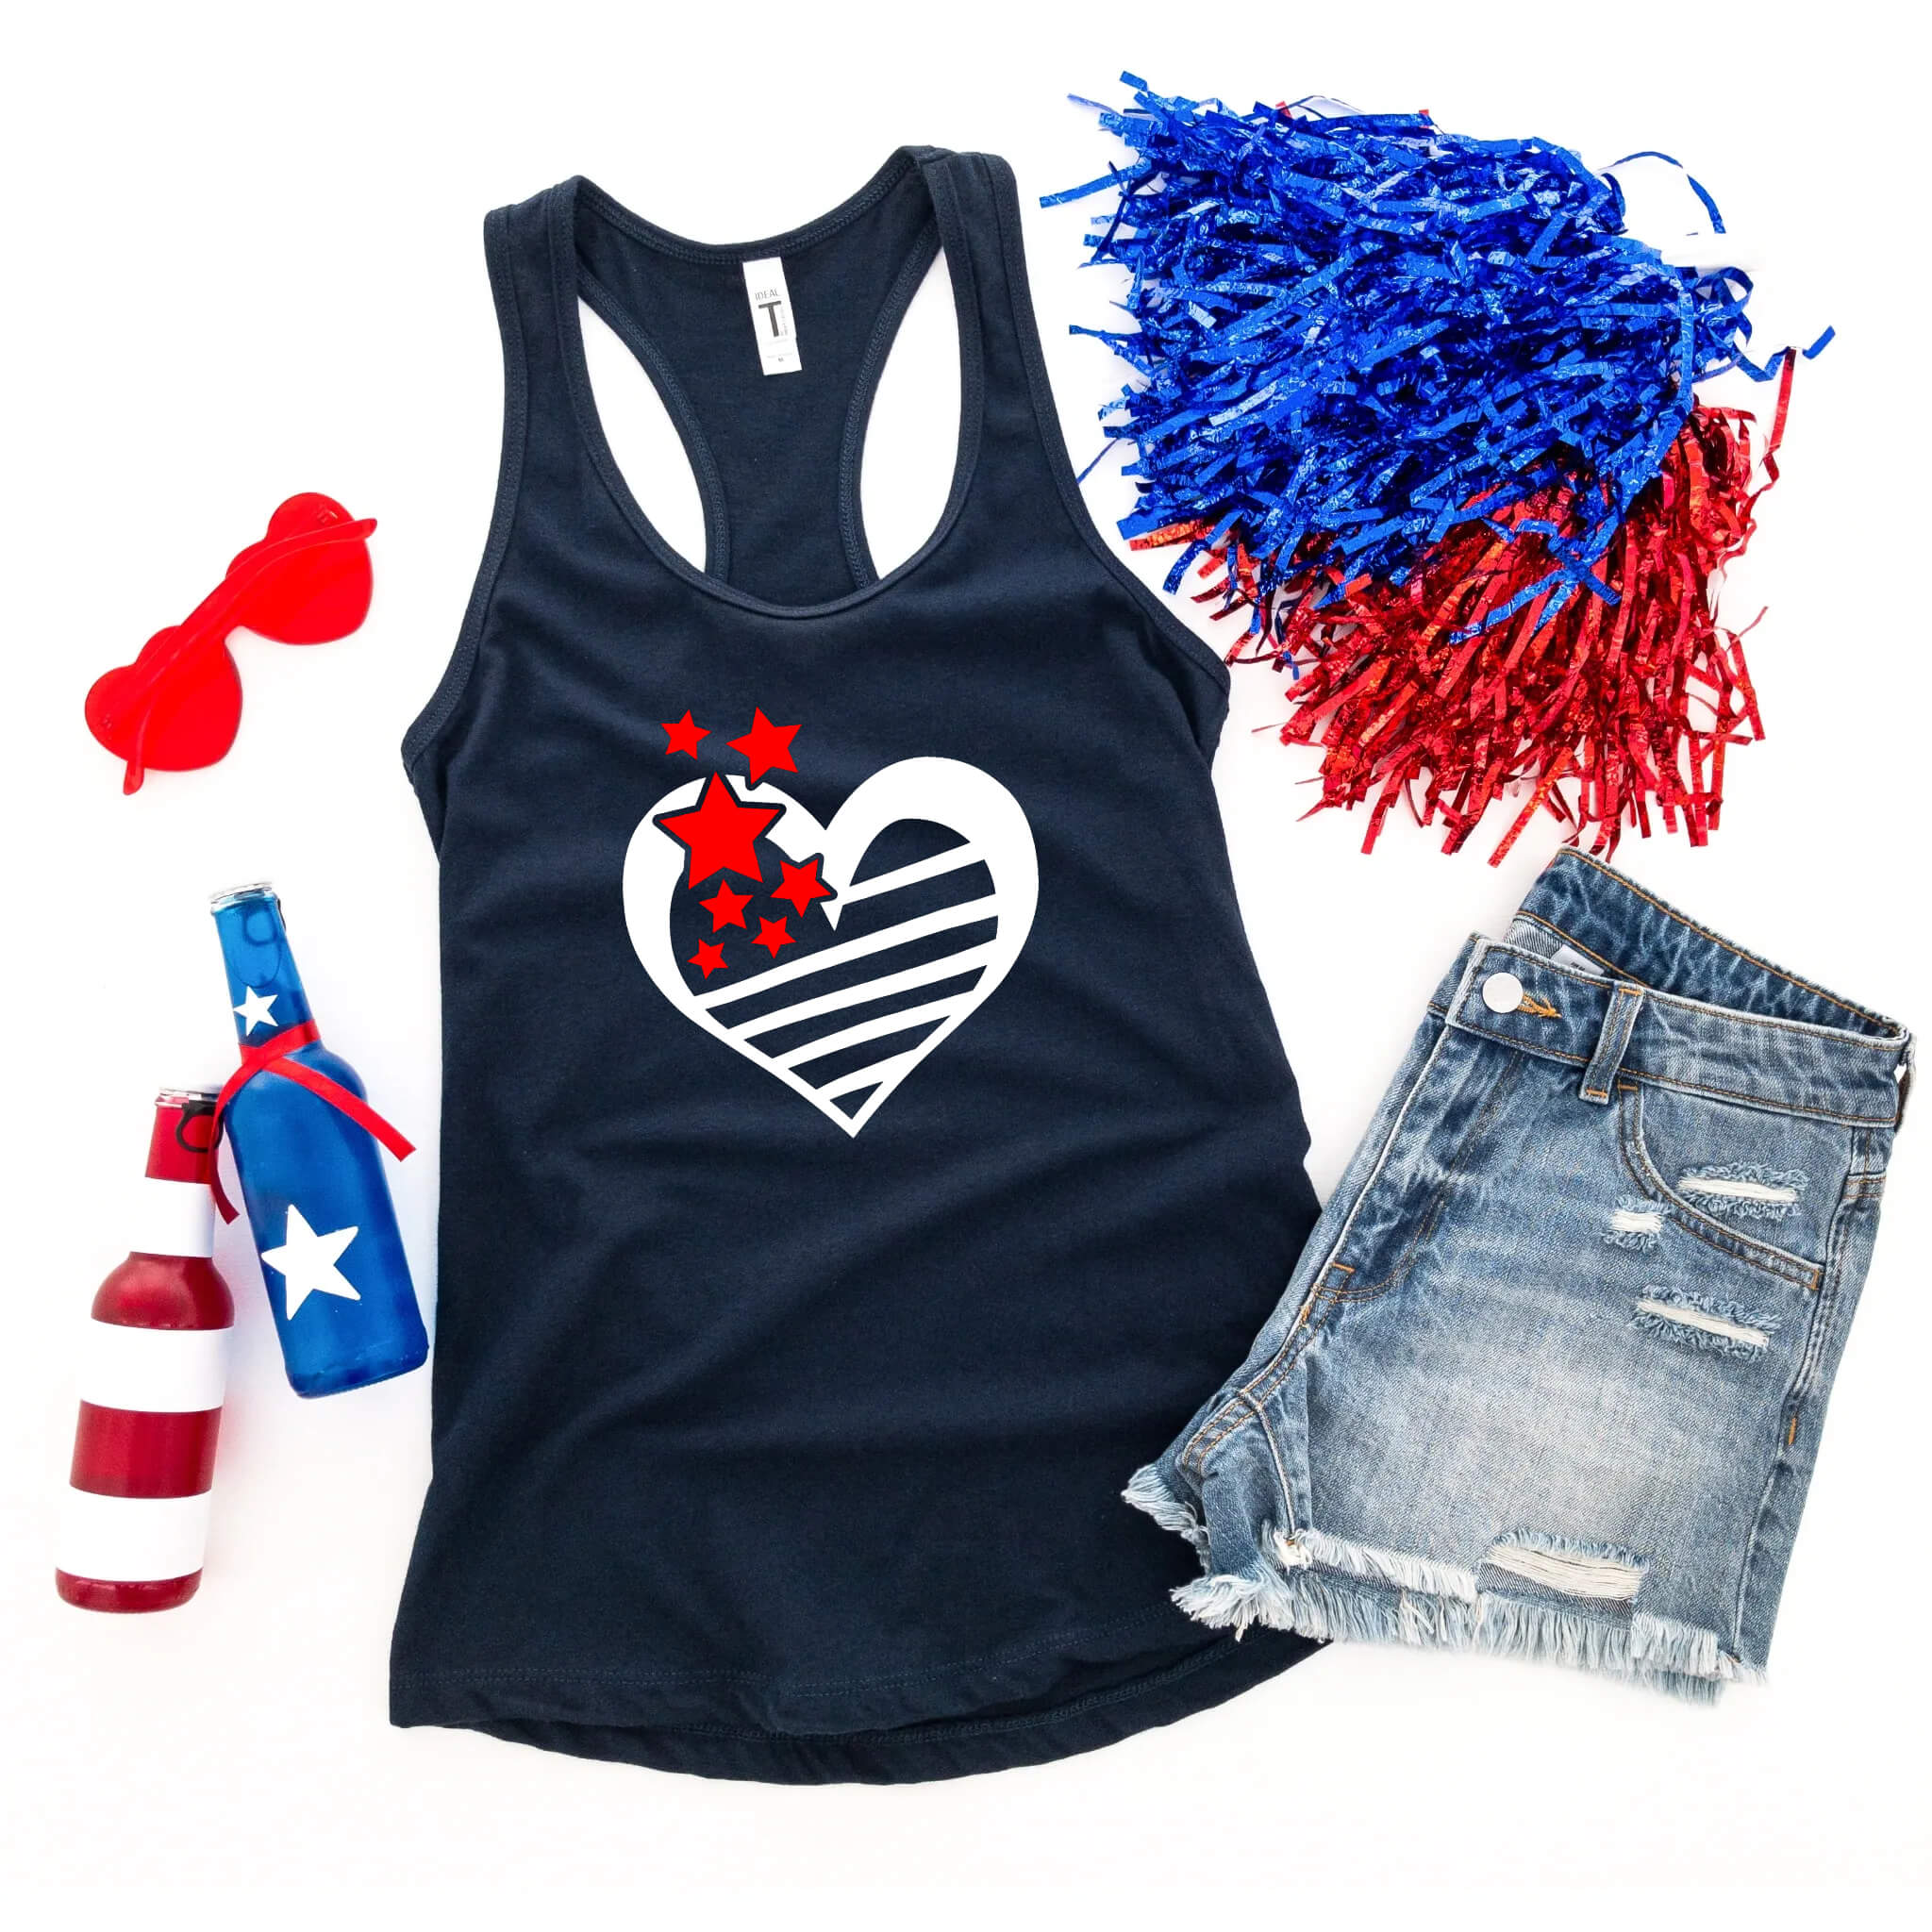 4th of July - Stars & Stripes Heart Patriotic Graphic Print Women’s T-Shirt / Tank Top